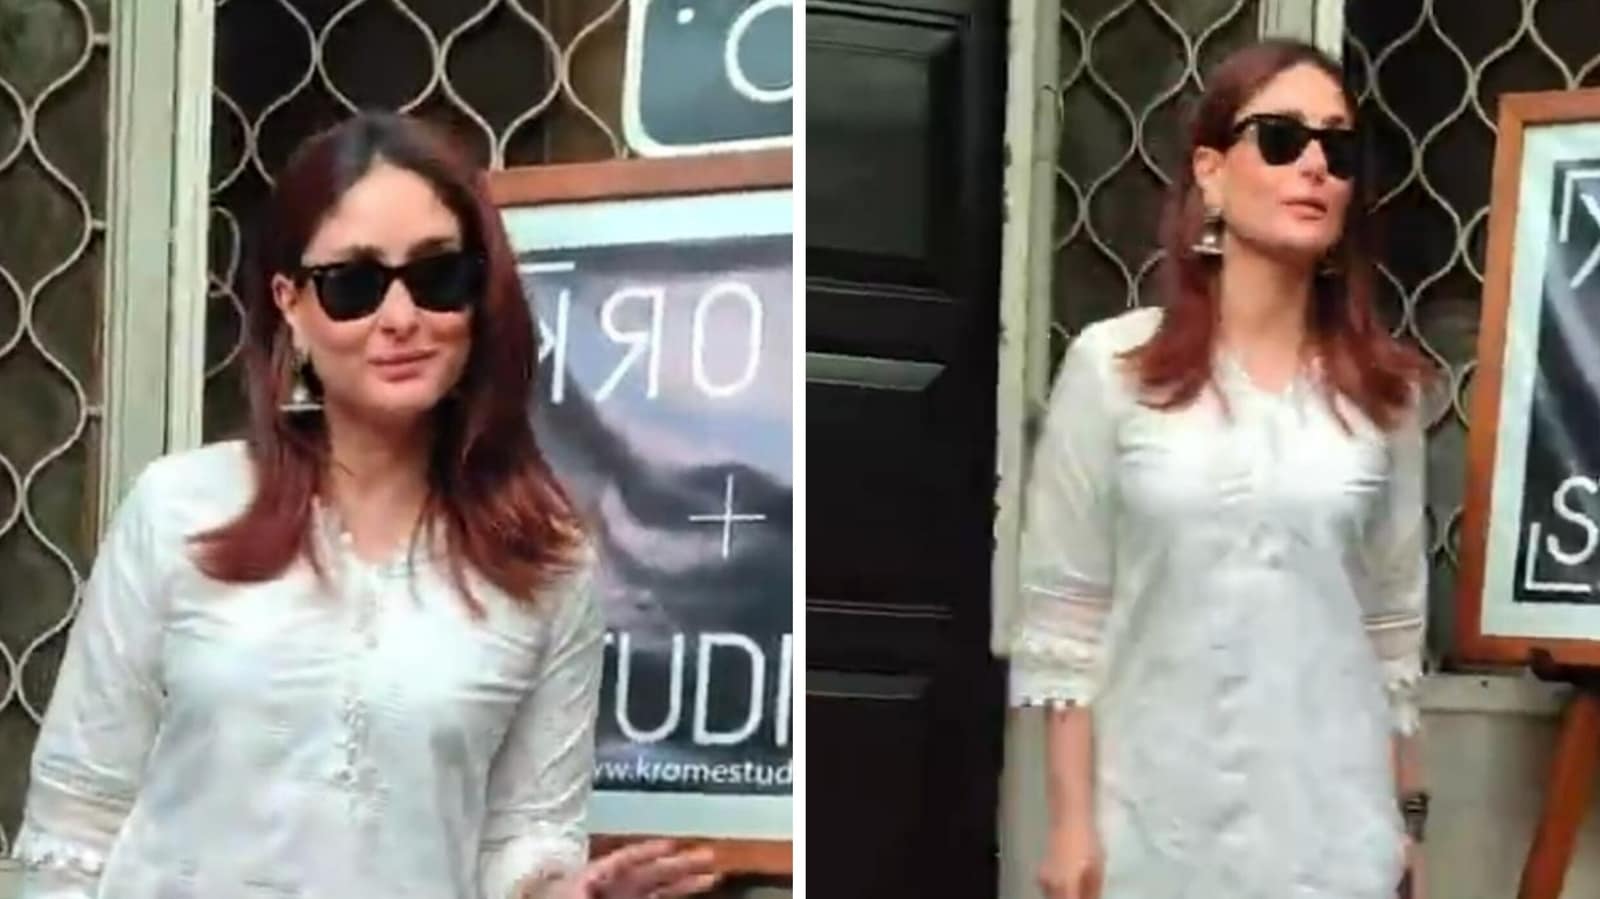 Kareena Kapoor Khan steps out in all white ensemble for shoot, fans react ‘gorgeous in white’